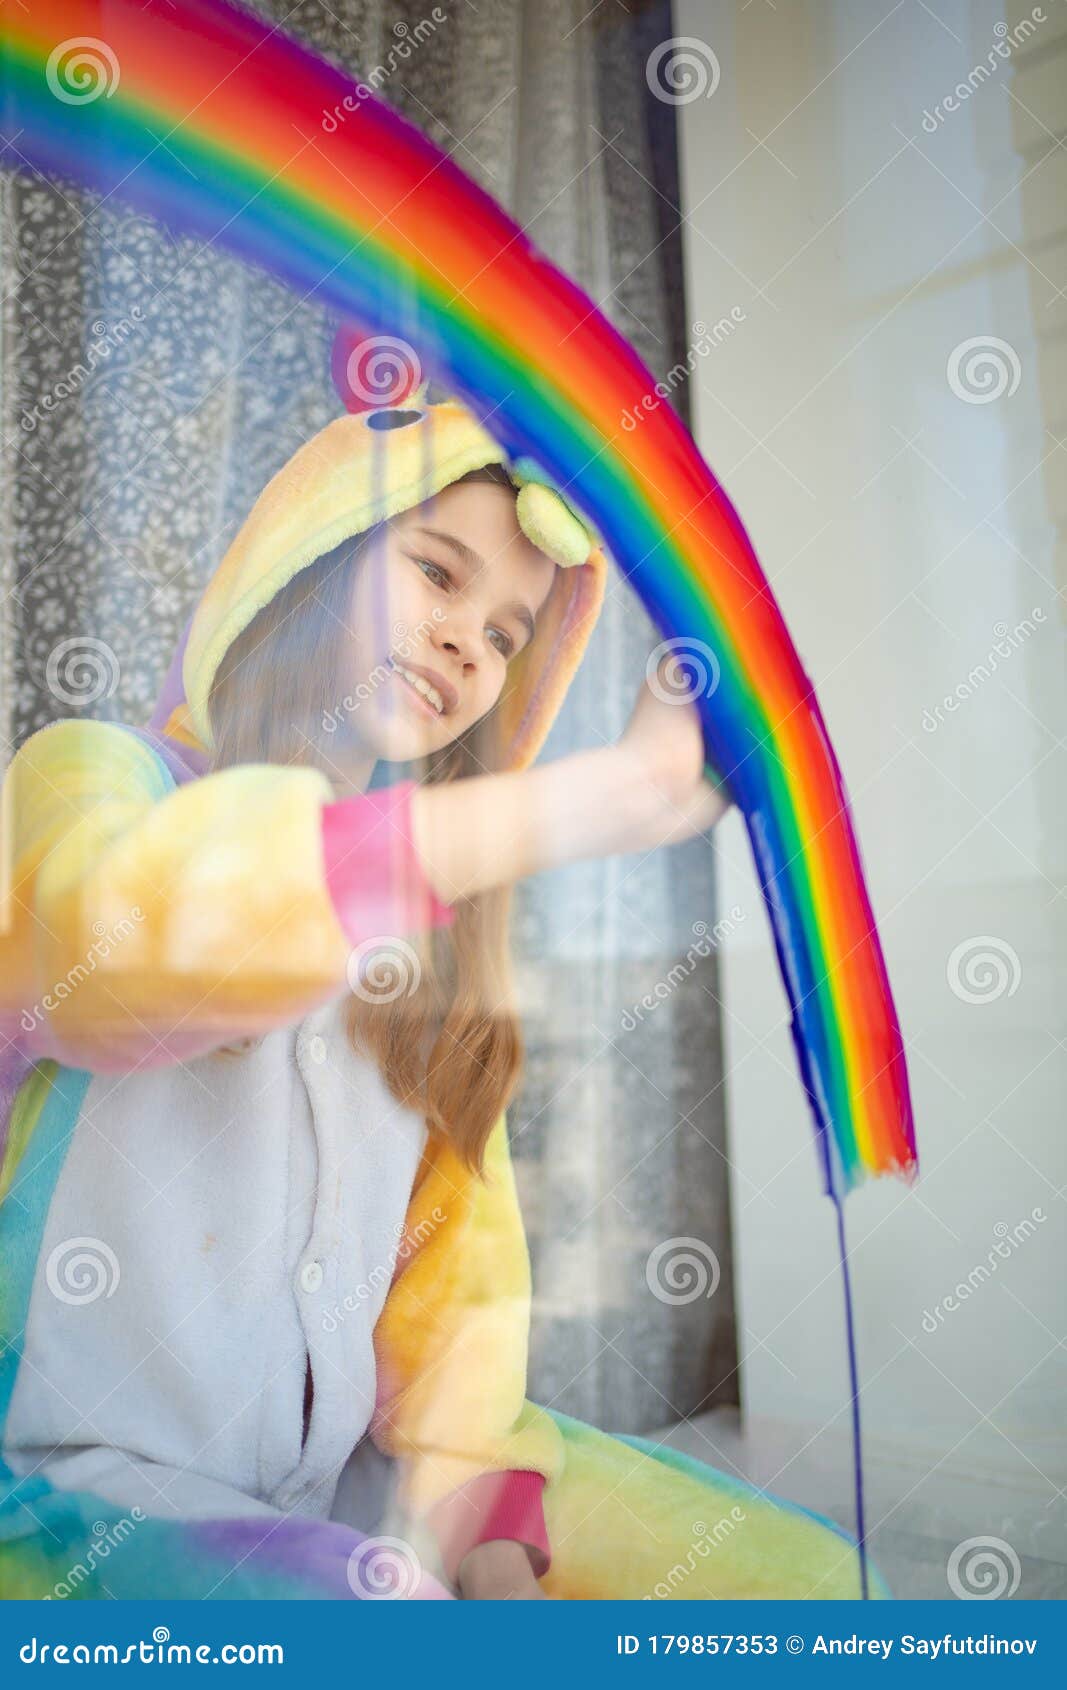 child girl in kigurumi draws rainbow on window.